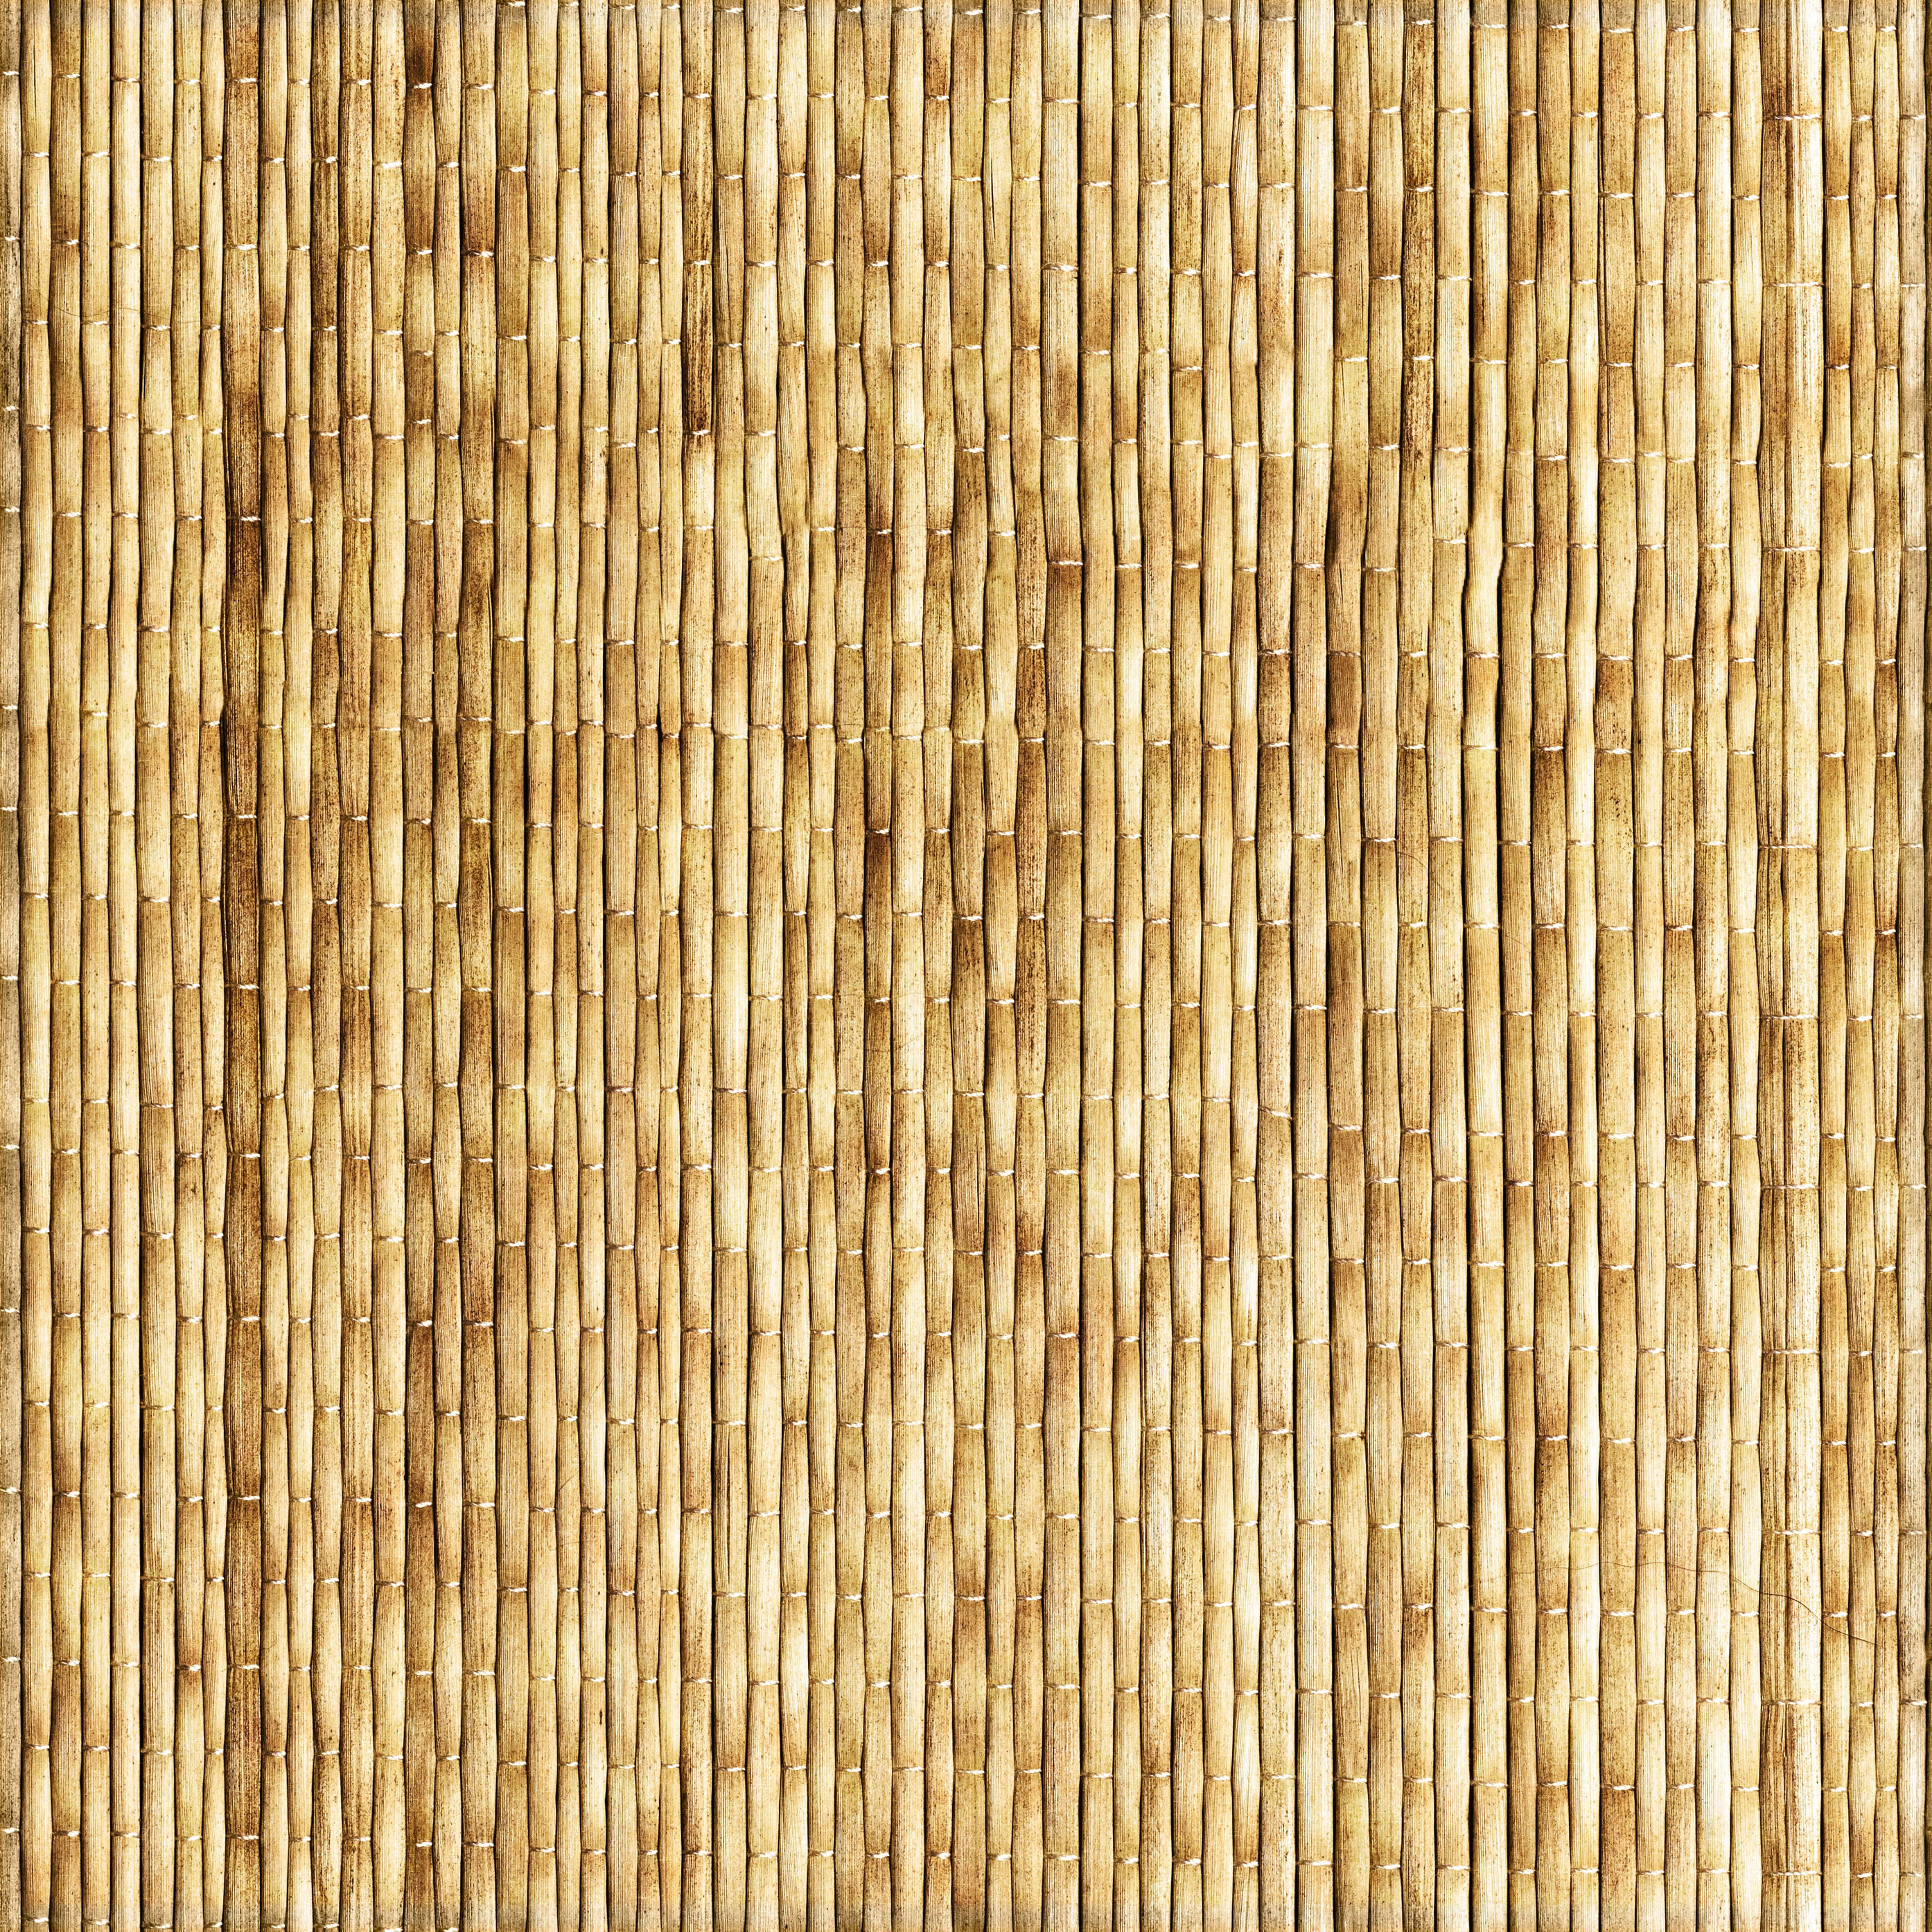 bamboo mat, carpet, texture, download photo, background, bamboo texture